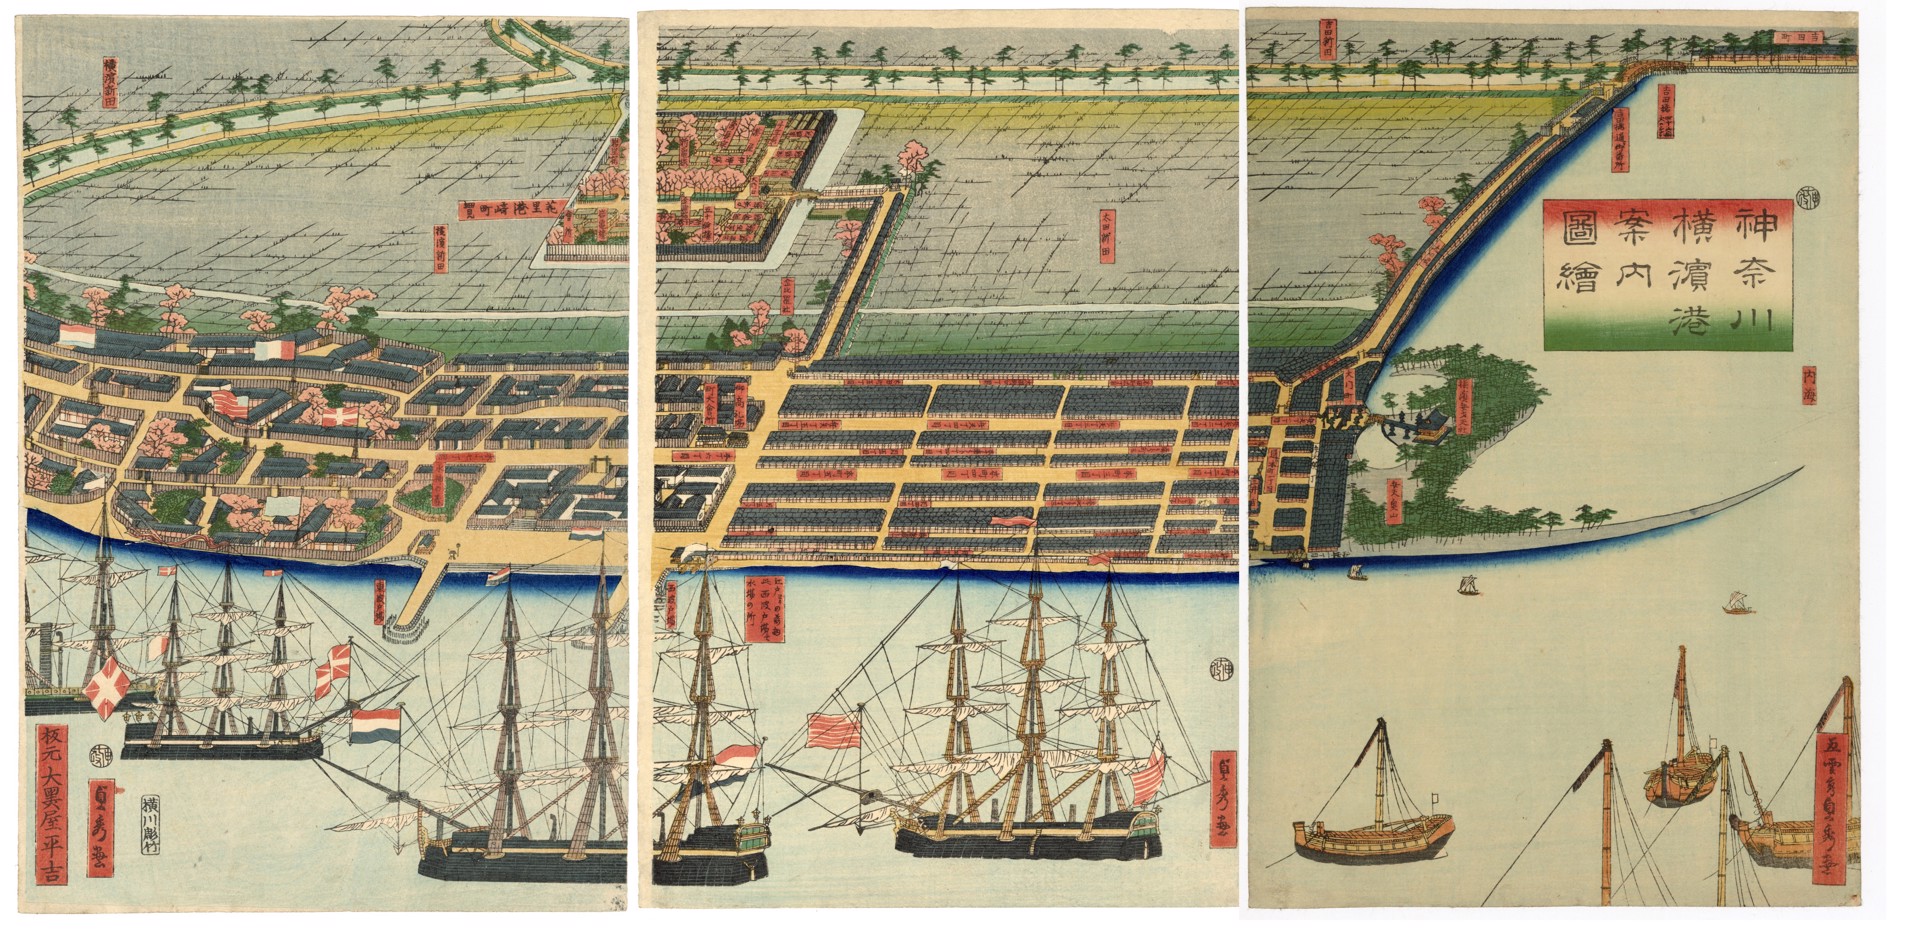 Pictorial Guide to Yokohama Harbor by Sadahide